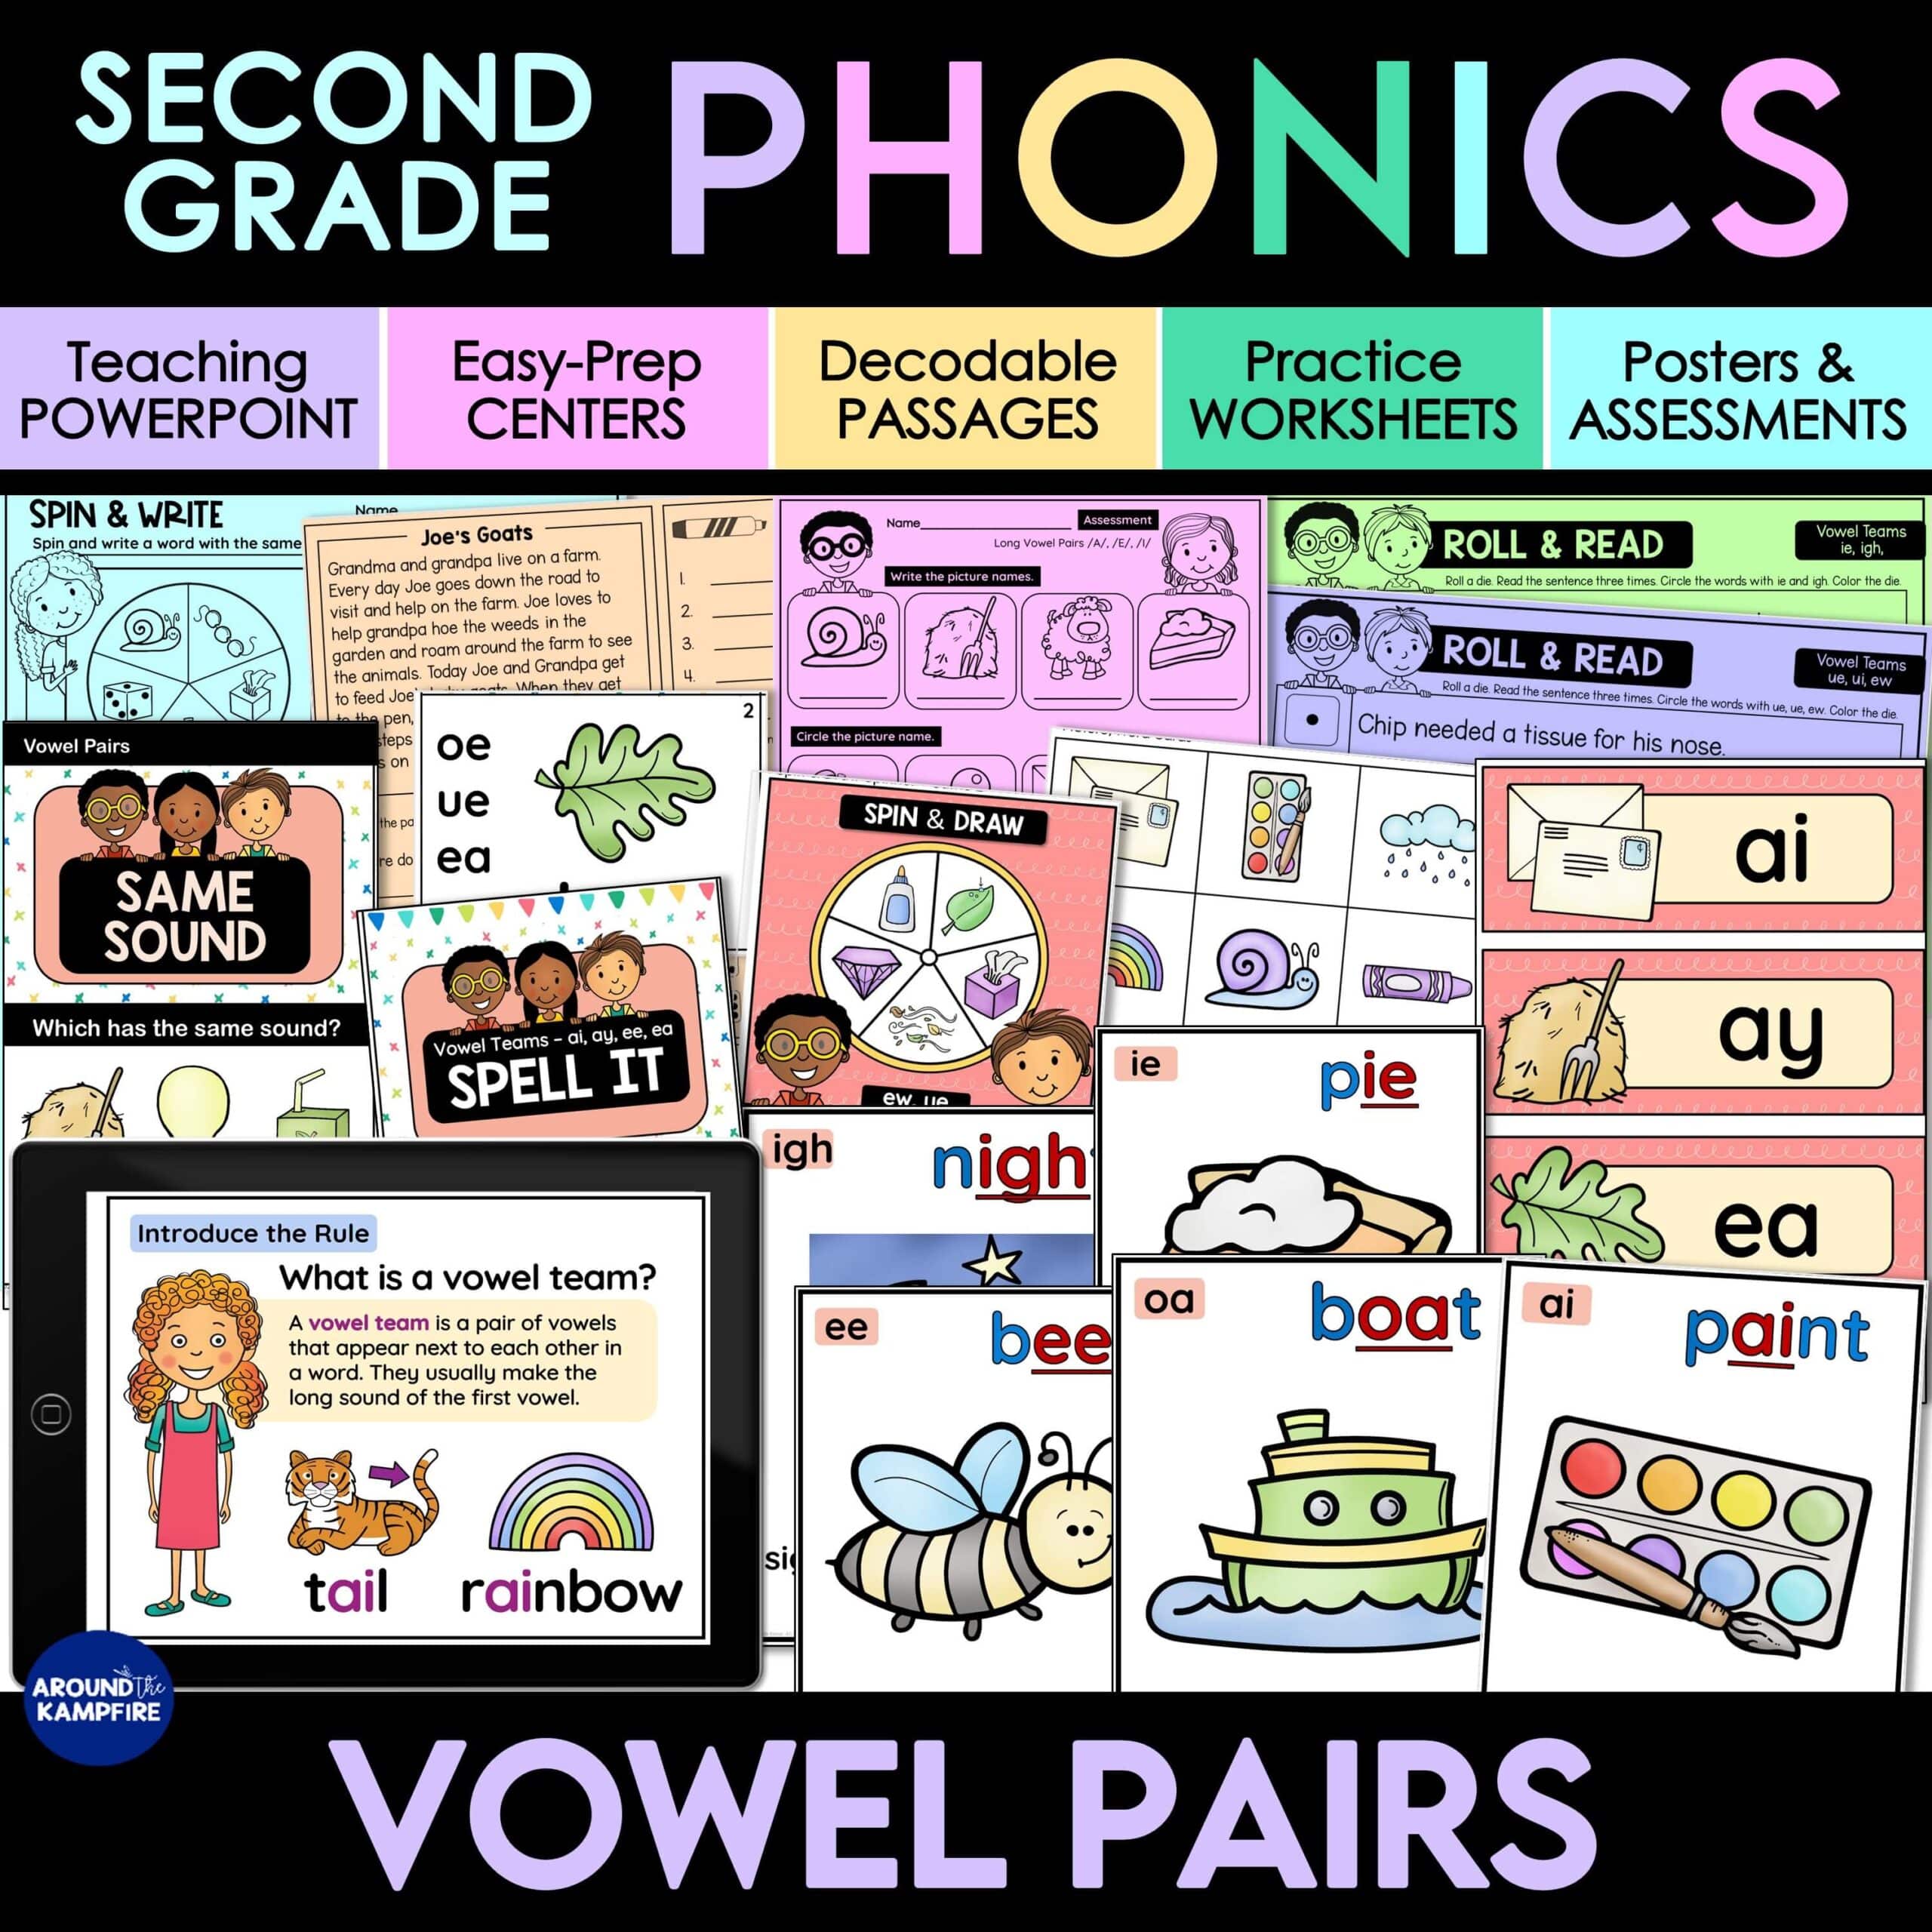 Vowel pairs phonics unit.